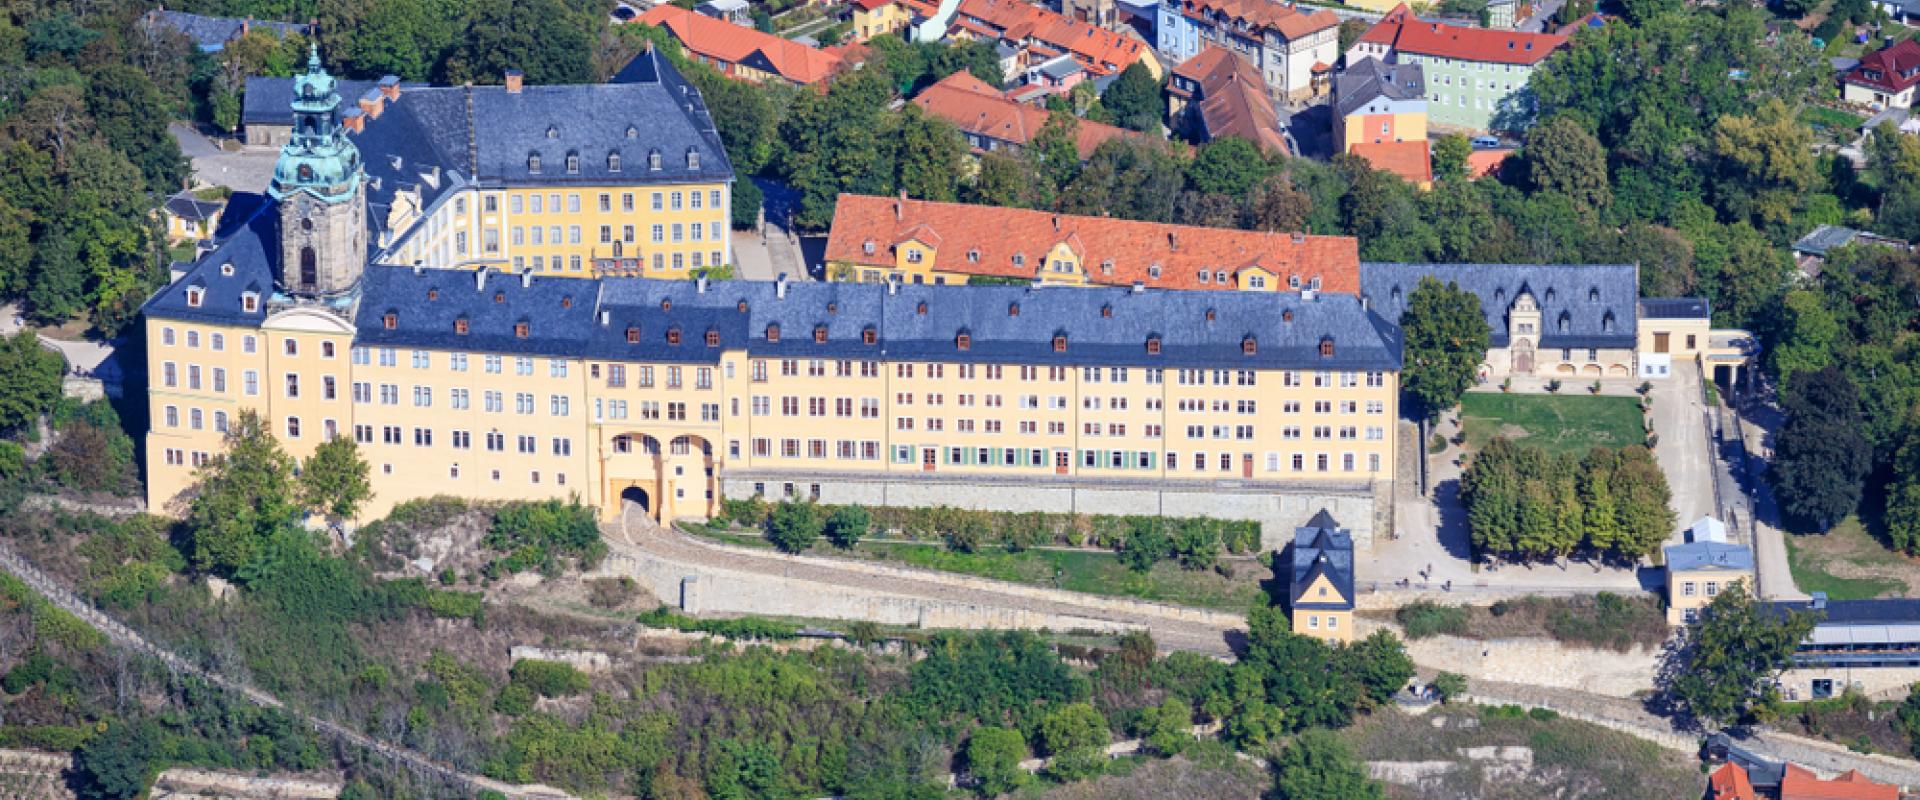 Rudolstadt Schloss 